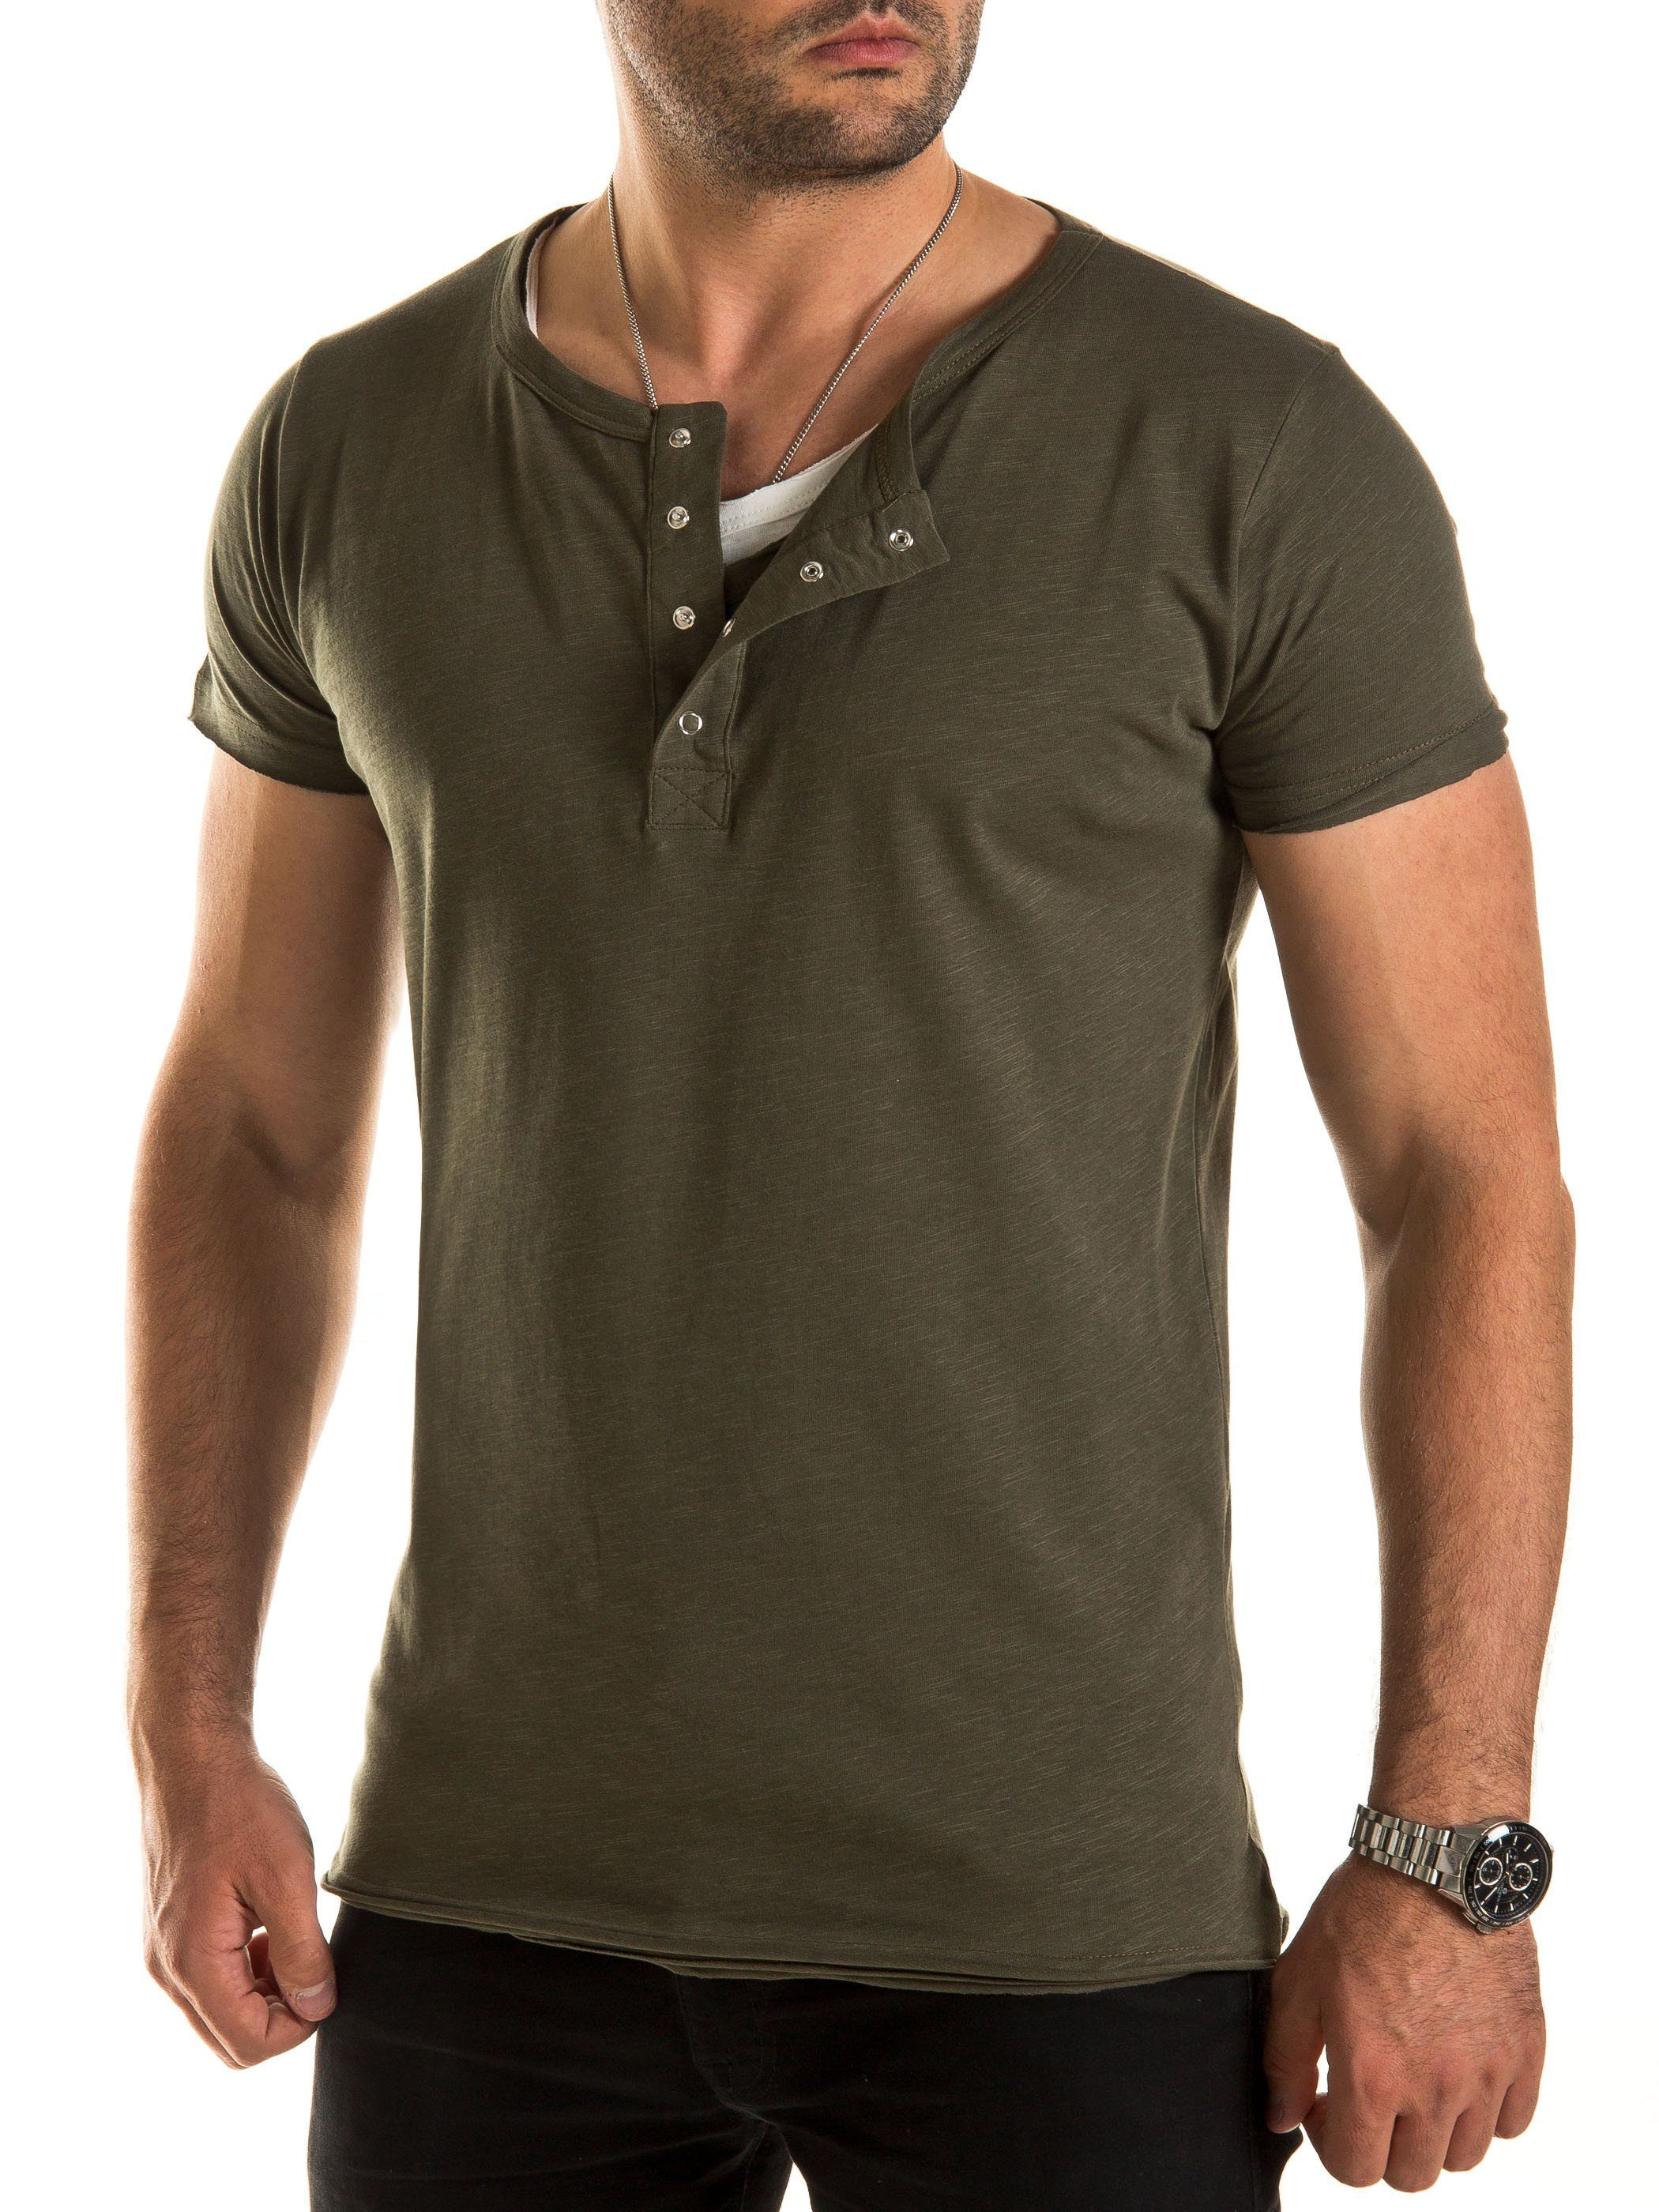 WOTEGA T-Shirt V-Neck Double Layer T-Shirt Pete (Packung) V-Neck Double Layer T-Shirt Pete Grau (grape leaf 190511)